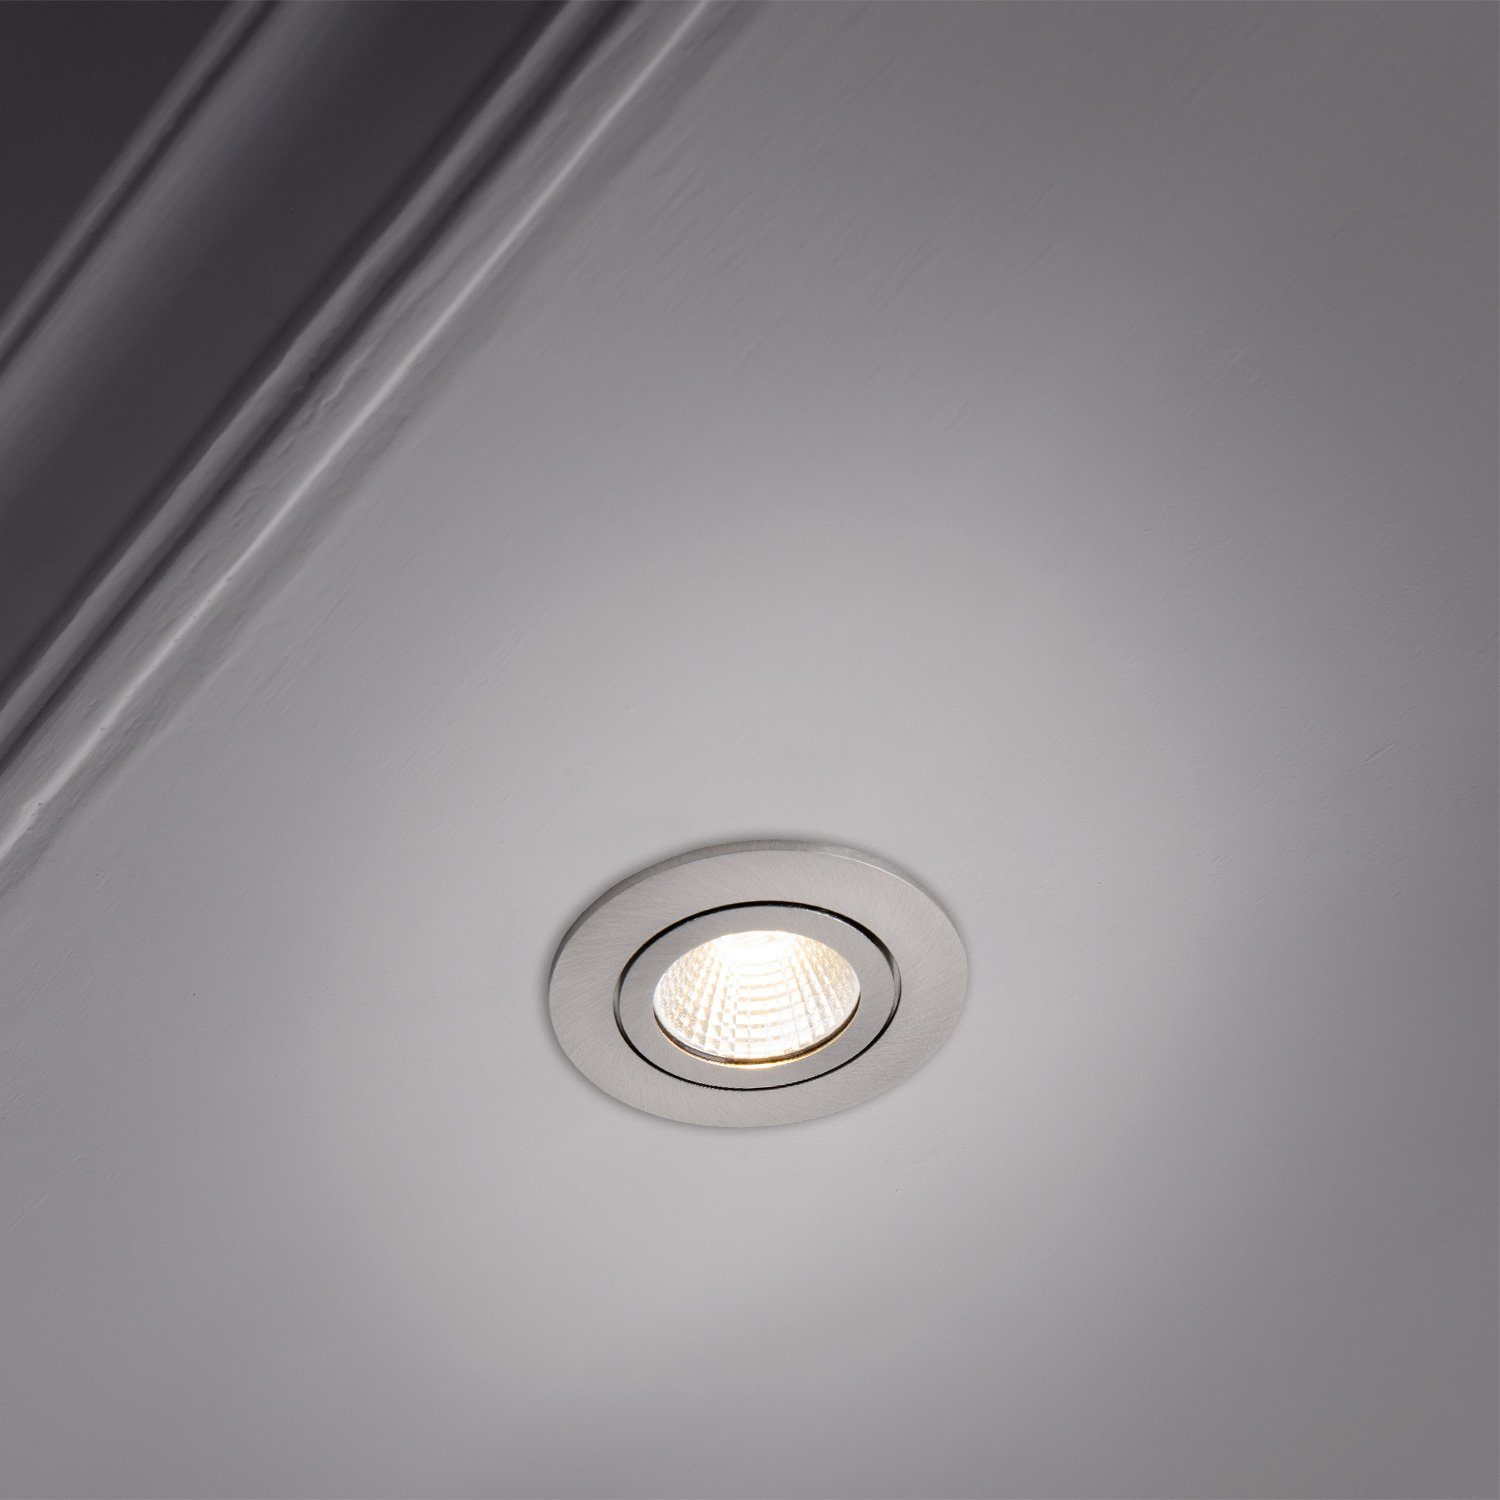 Paco Home Einbauleuchte Rita, LED Einbaustrahler Spotlight wechselbar, Strahler LED Schwenkbar Warmweiß, Flach dimmbar LED